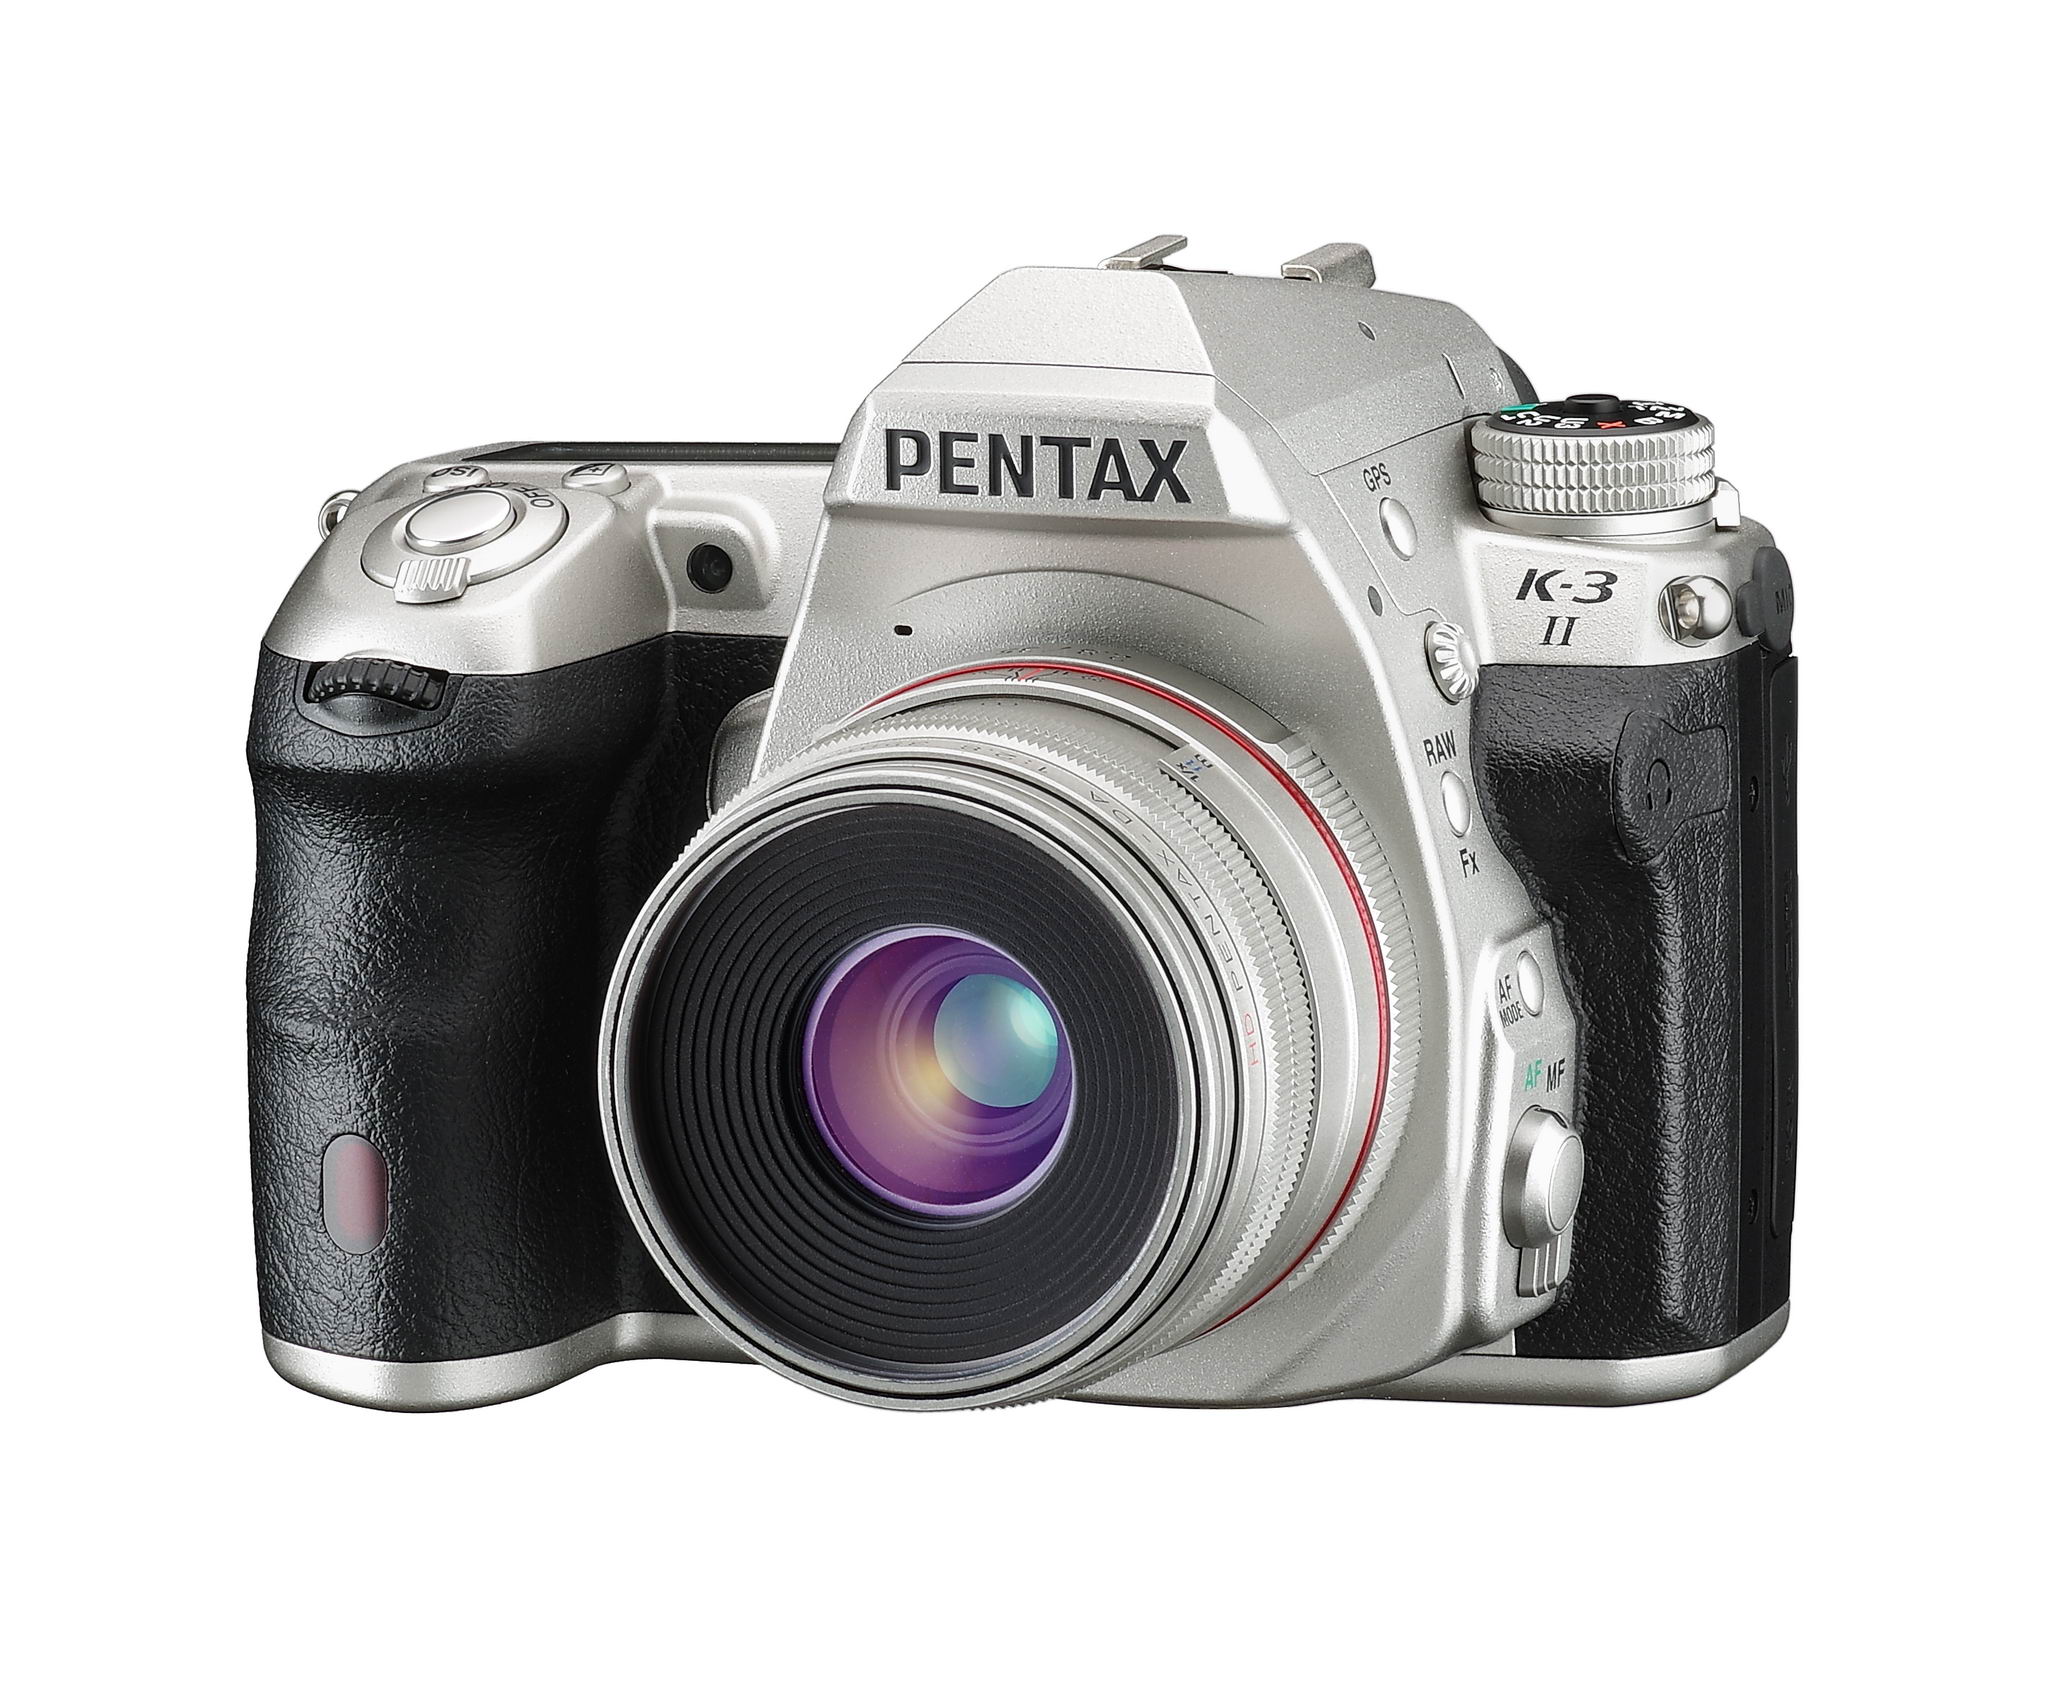 Kマウントデジタル一眼レフカメラ「PENTAX K-3 II Silver Edition」を限定発売｜RICOH IMAGING